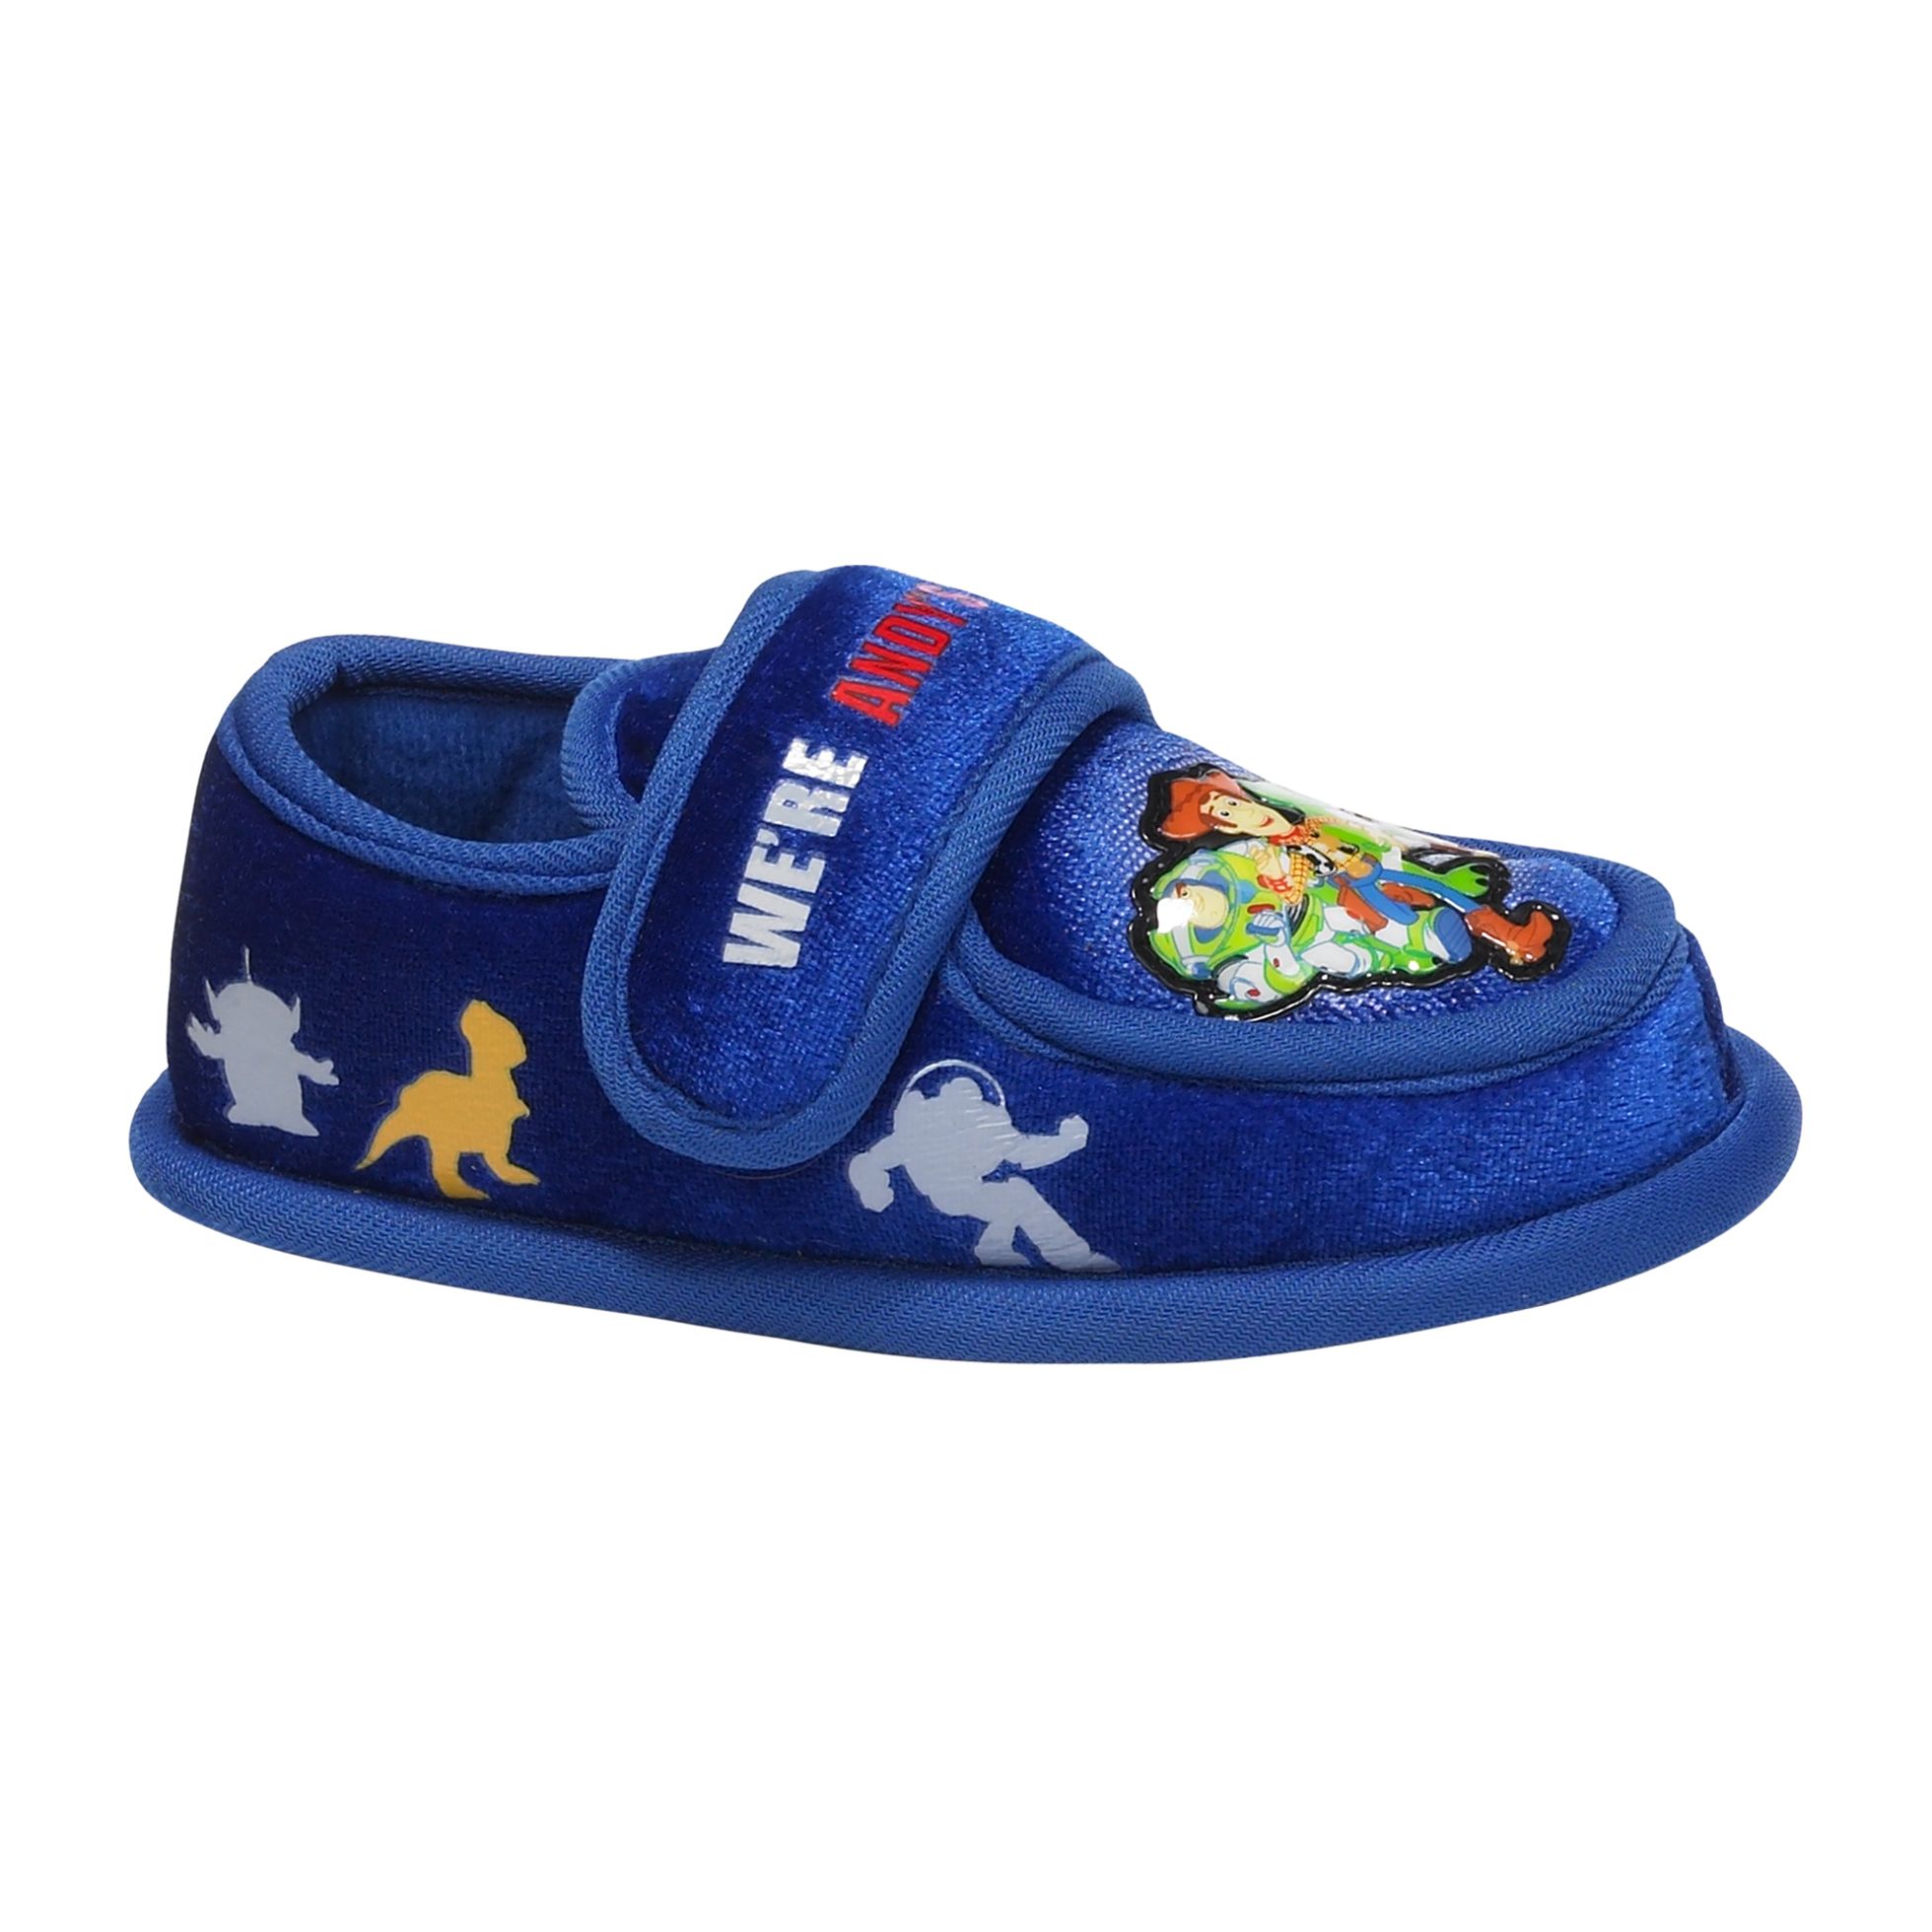 Disney Toddler Boy Toy Story Blue Clothing, Shoes